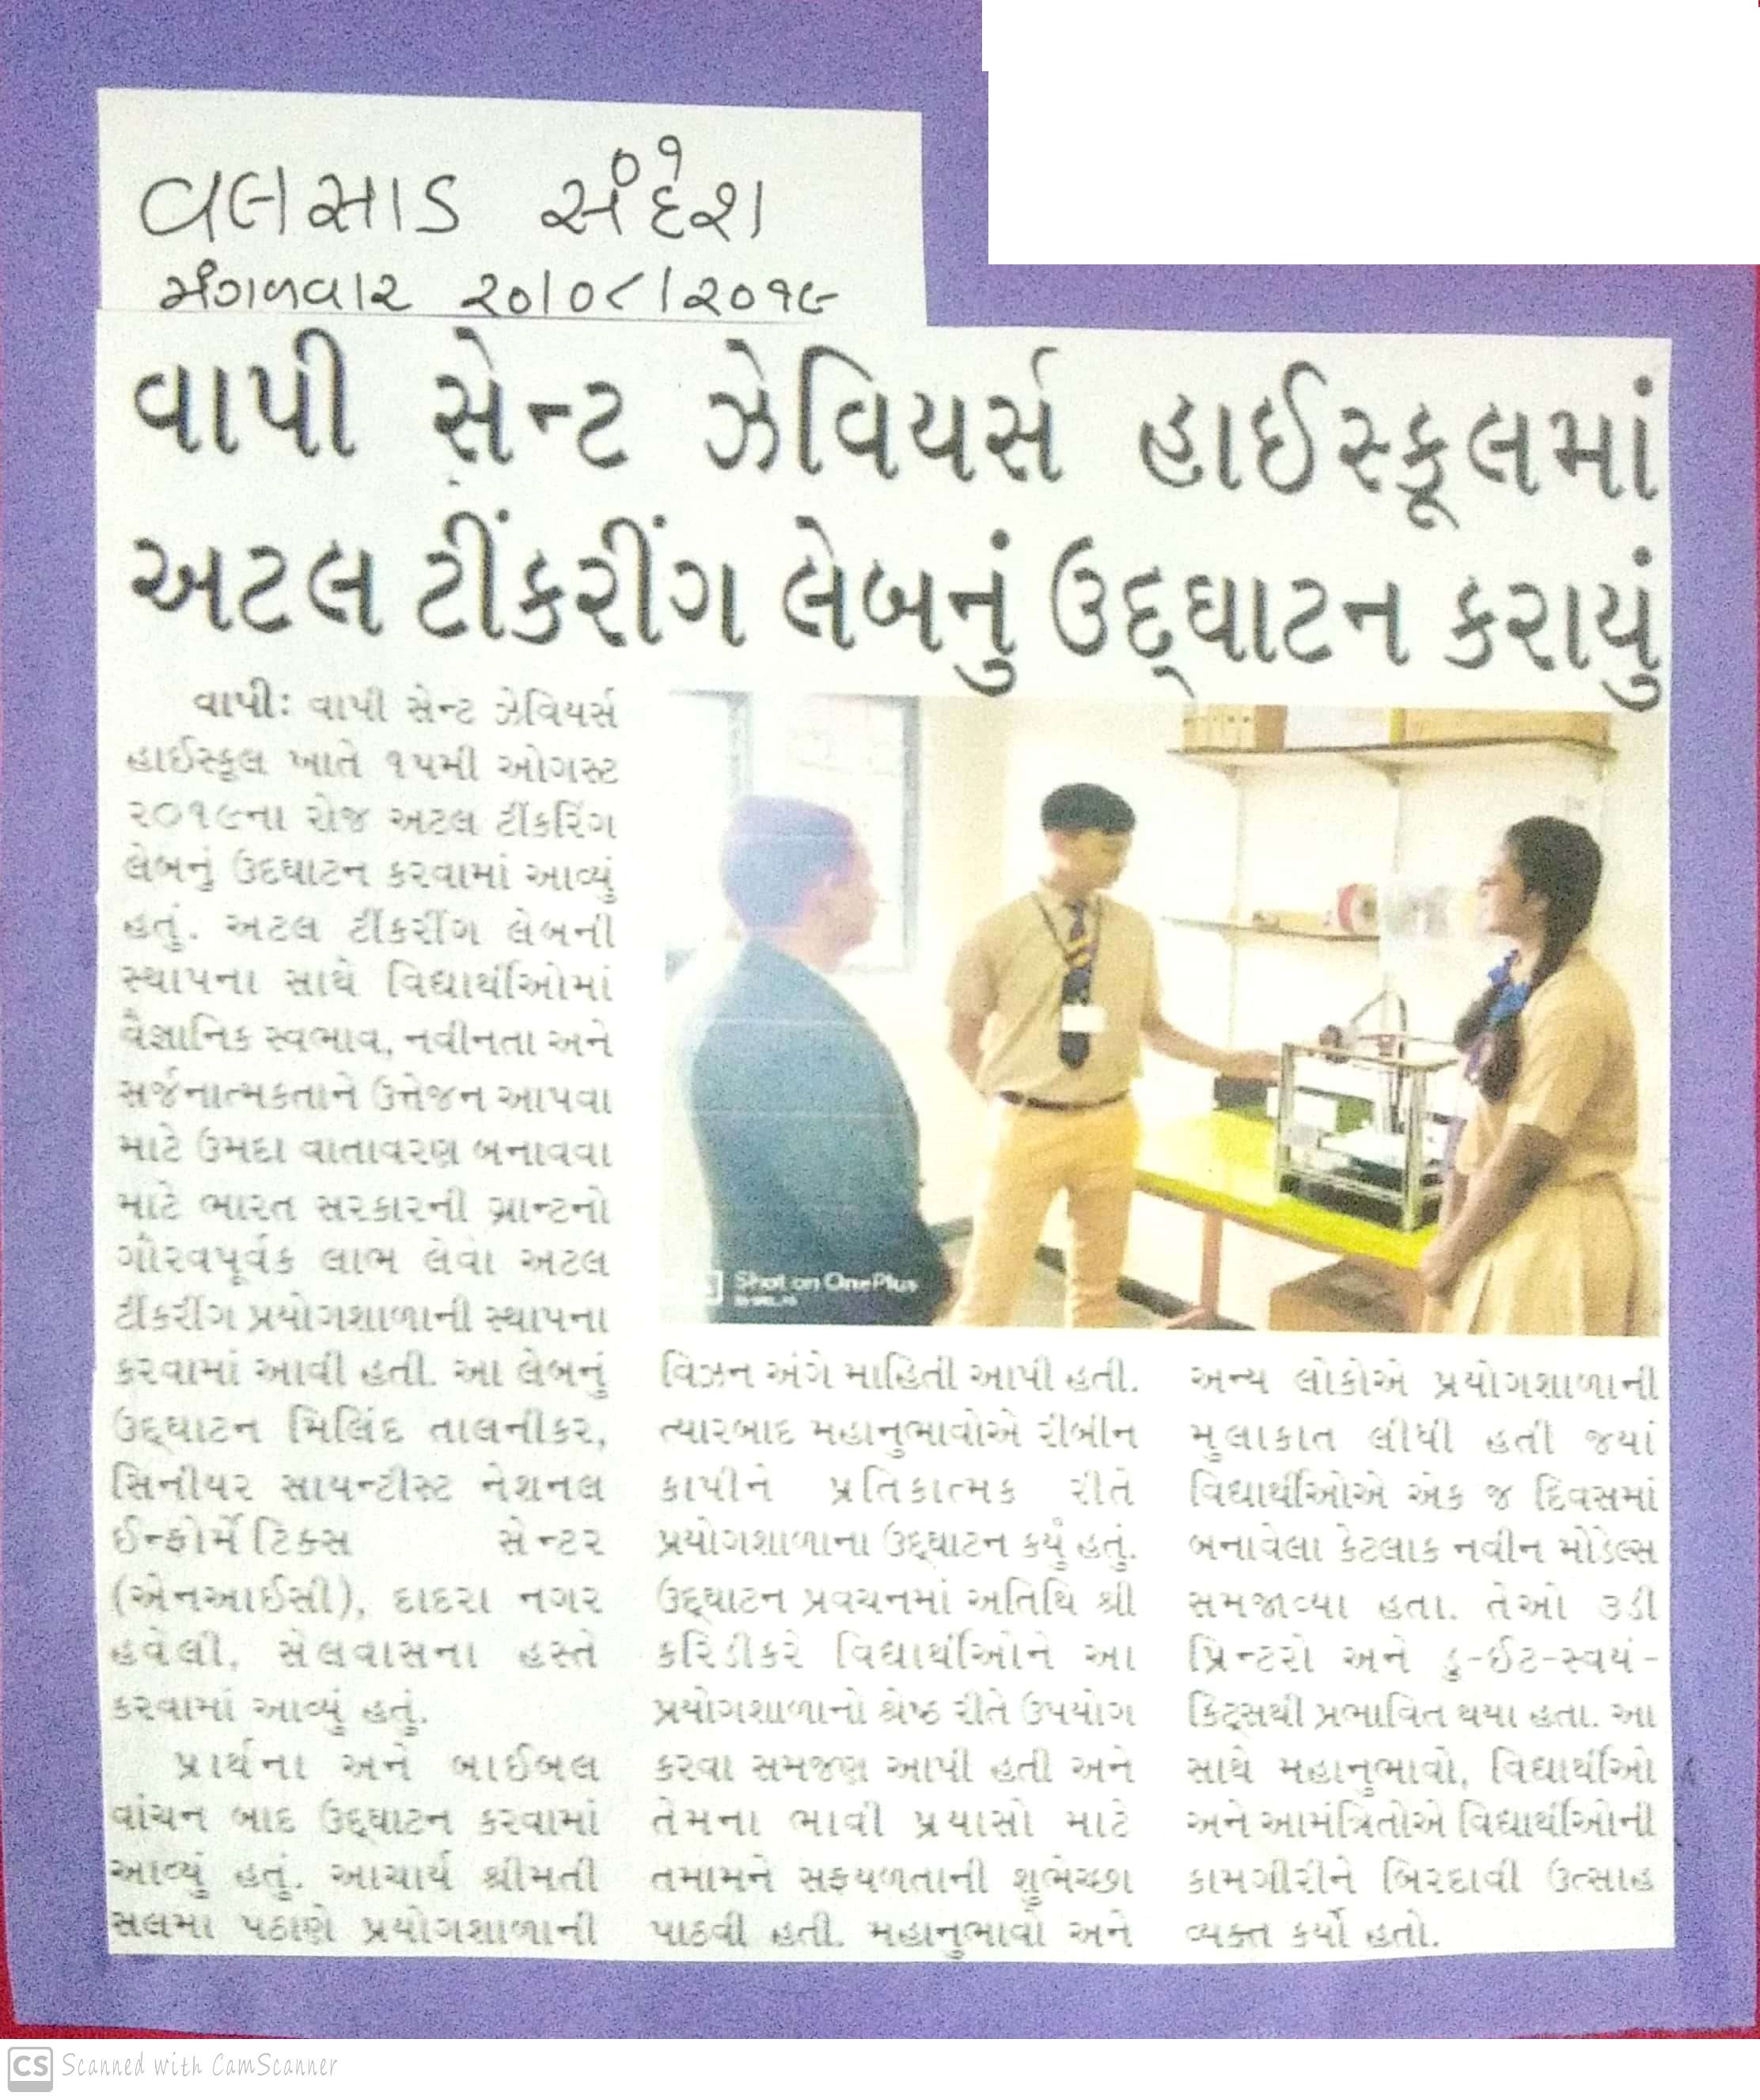 Alt Lab Inauguration Ceremony Was Featured In Samachar - Ryan International School, Vapi